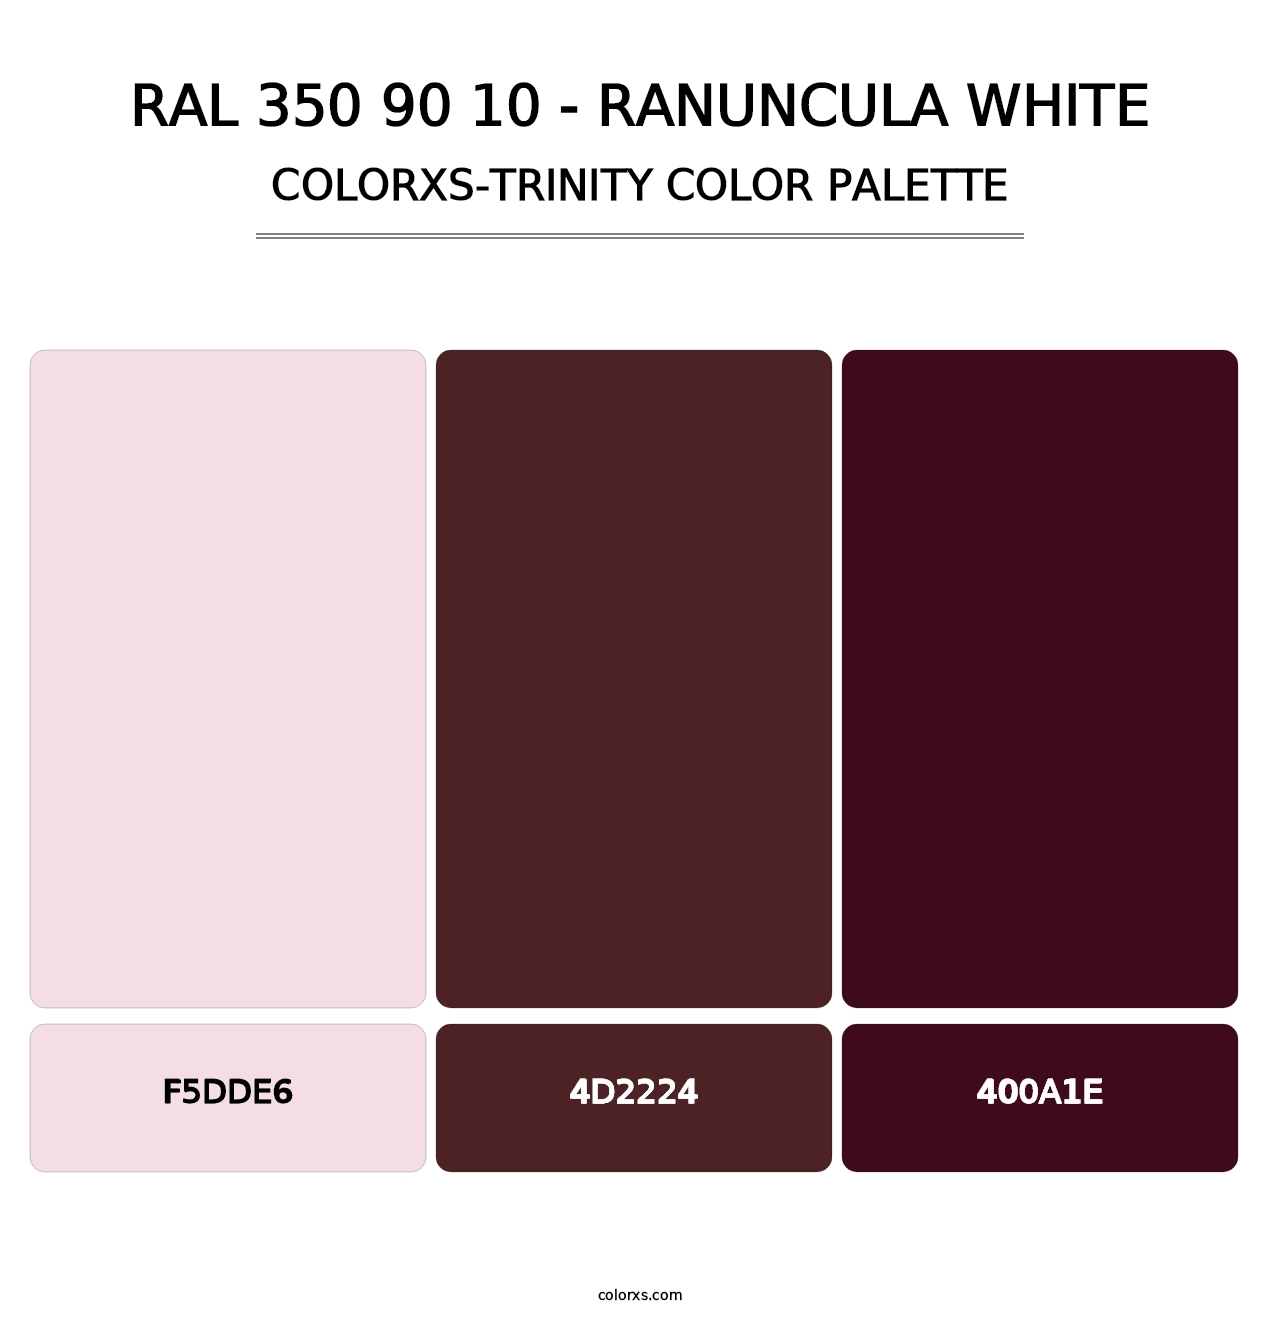 RAL 350 90 10 - Ranuncula White - Colorxs Trinity Palette